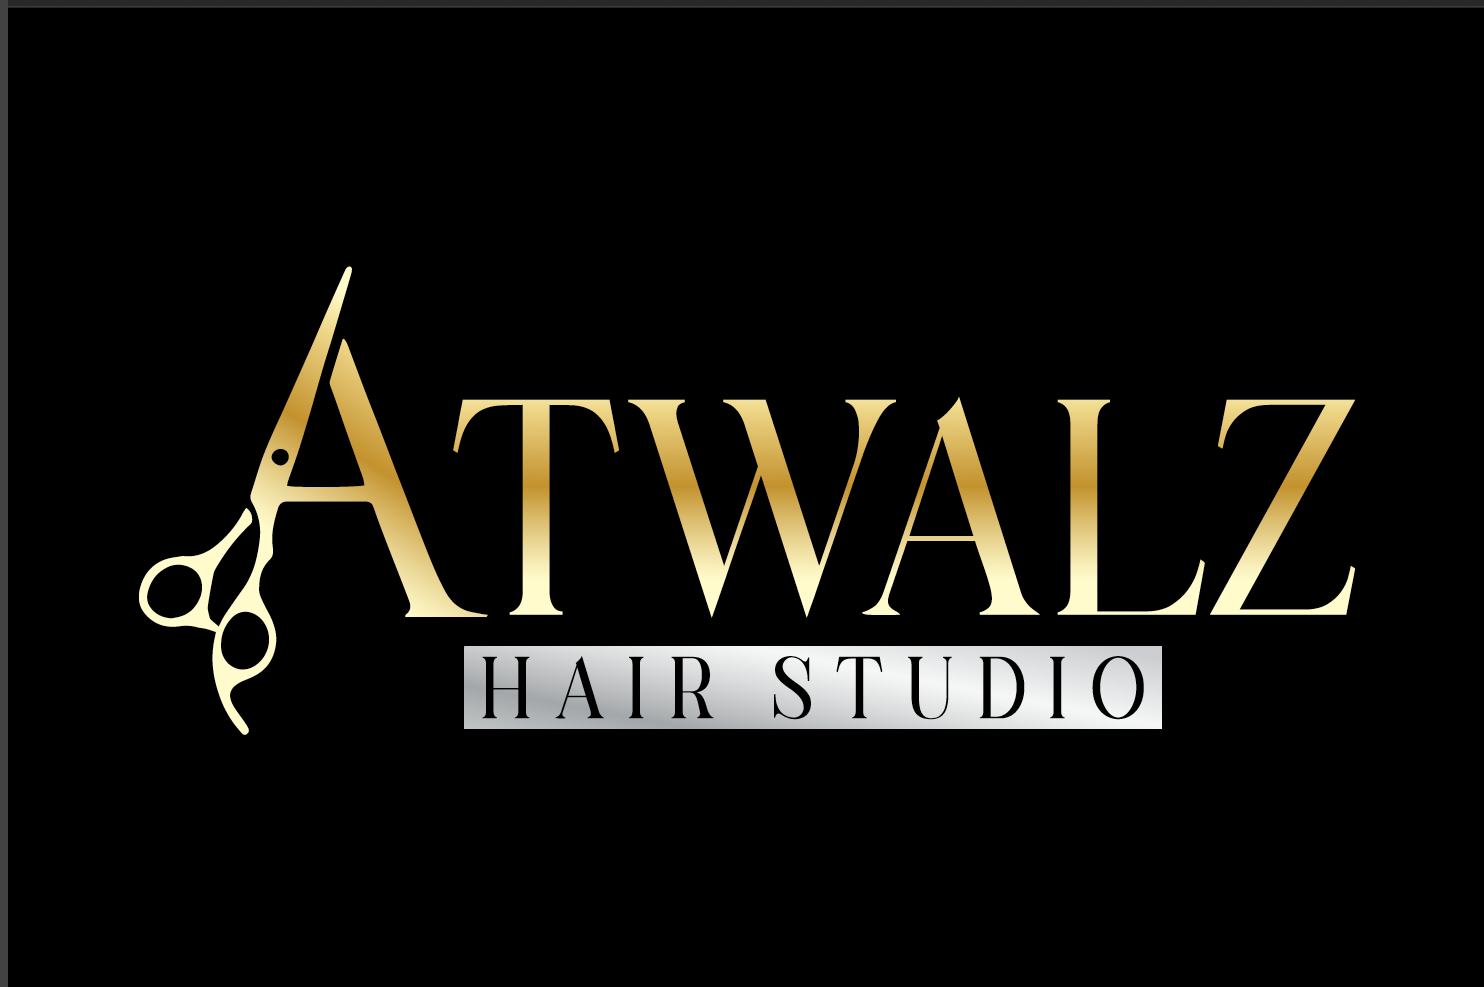 Atwalz Hair Studio